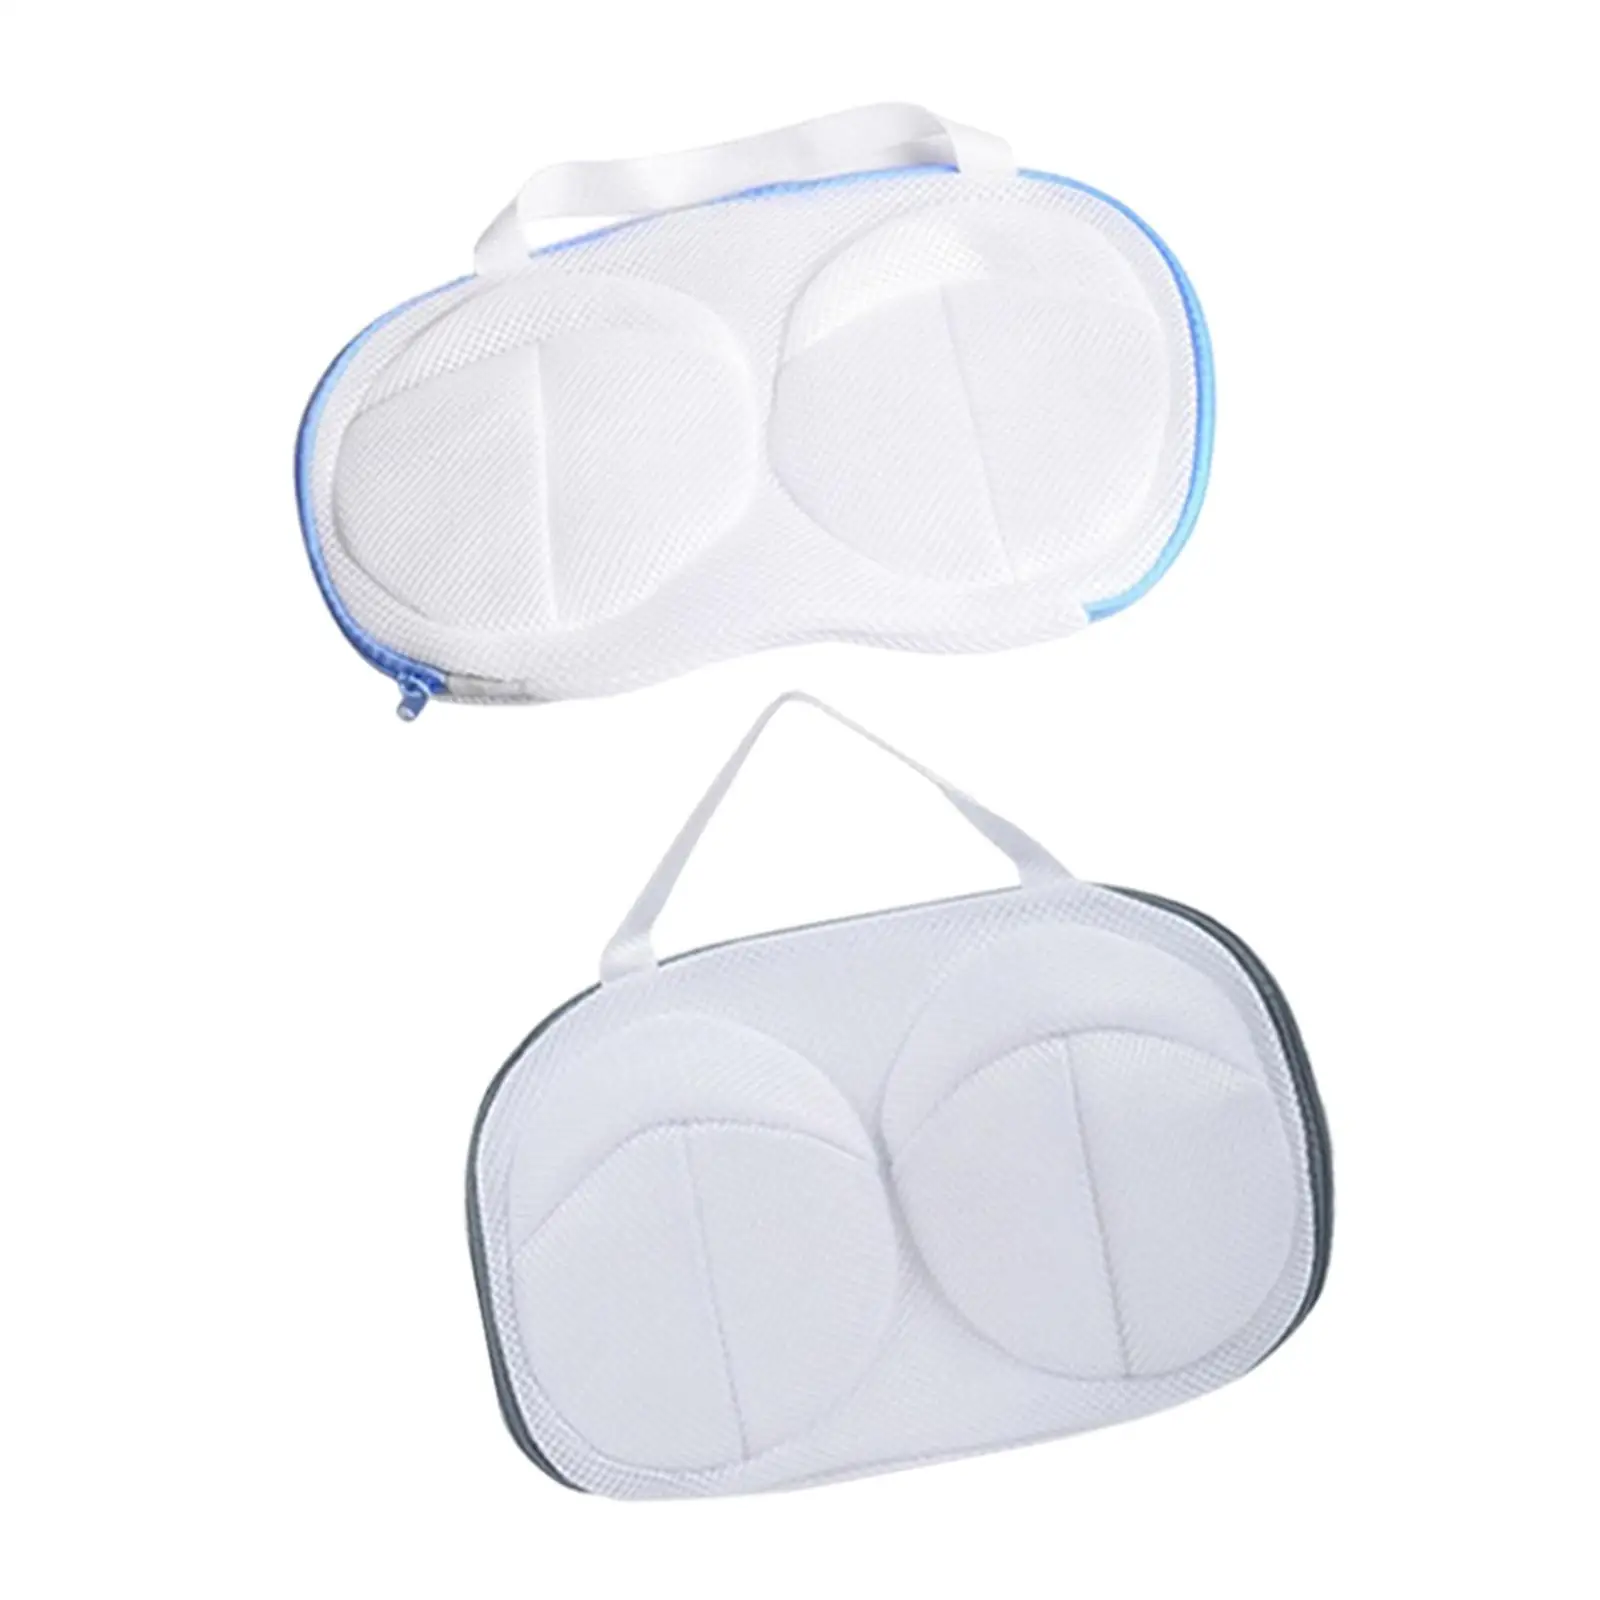 Bra Washing Bag, Bra Laundry Bag for Air Drying & Hanging Laundry Net Bag Breathable for Underwear Reusable Bra Net Washing Bag